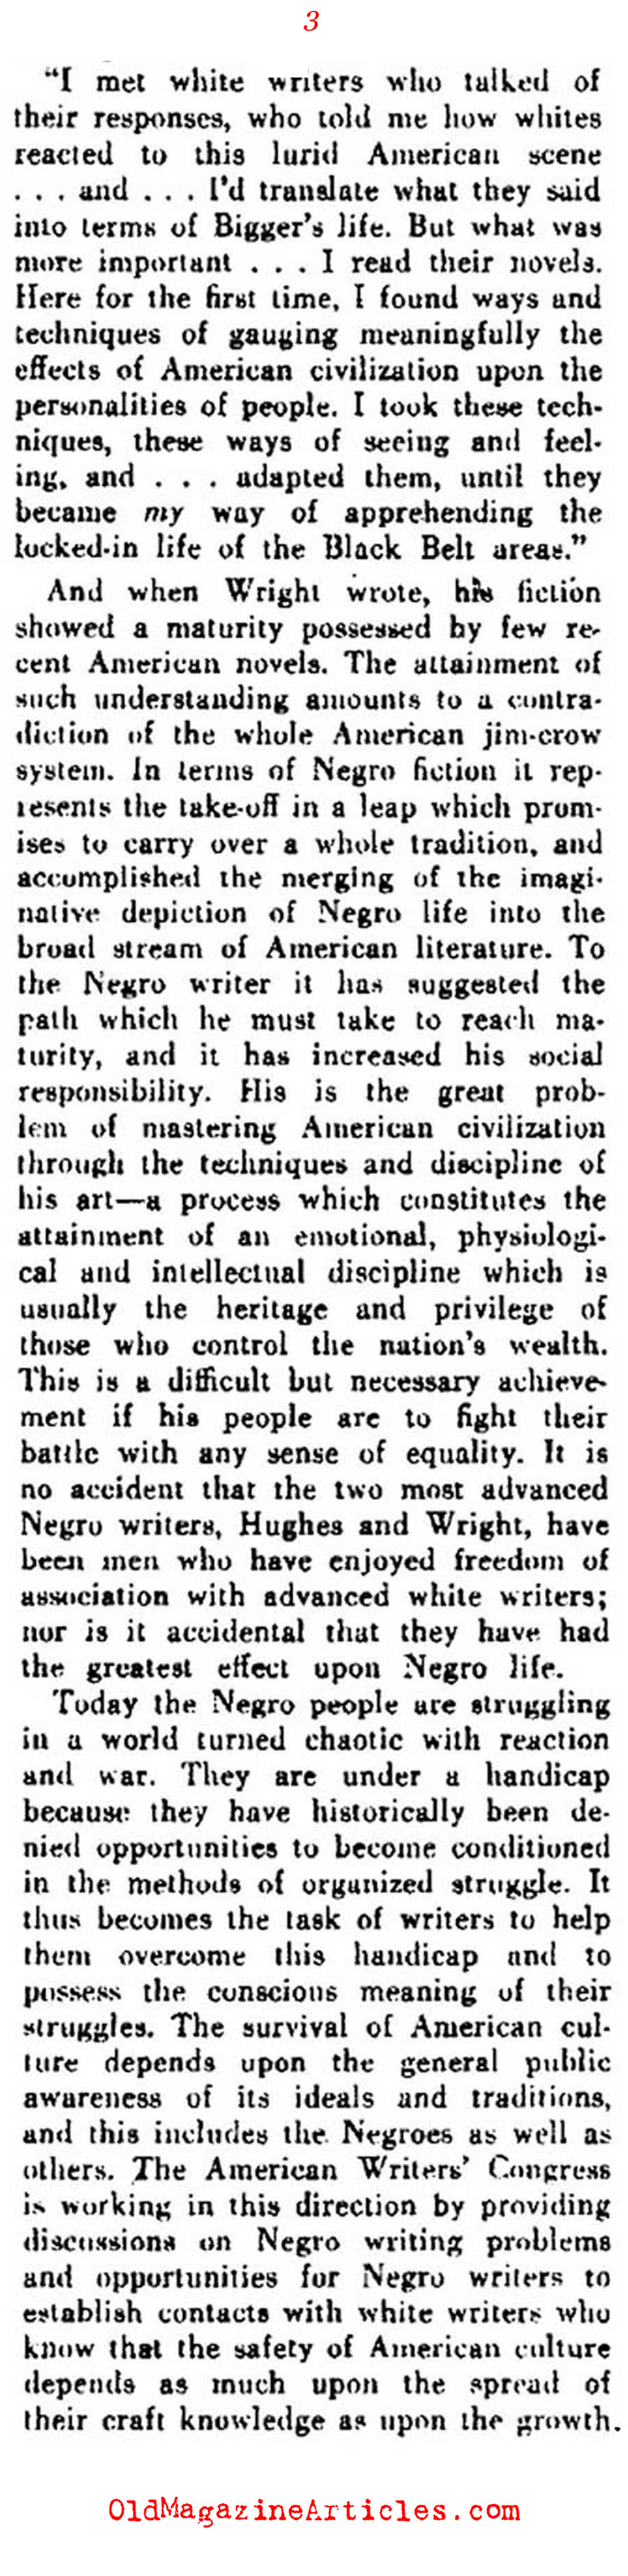 Ralph Ellison on Richard Wright Among Others... (Direction Magazine, 1941)